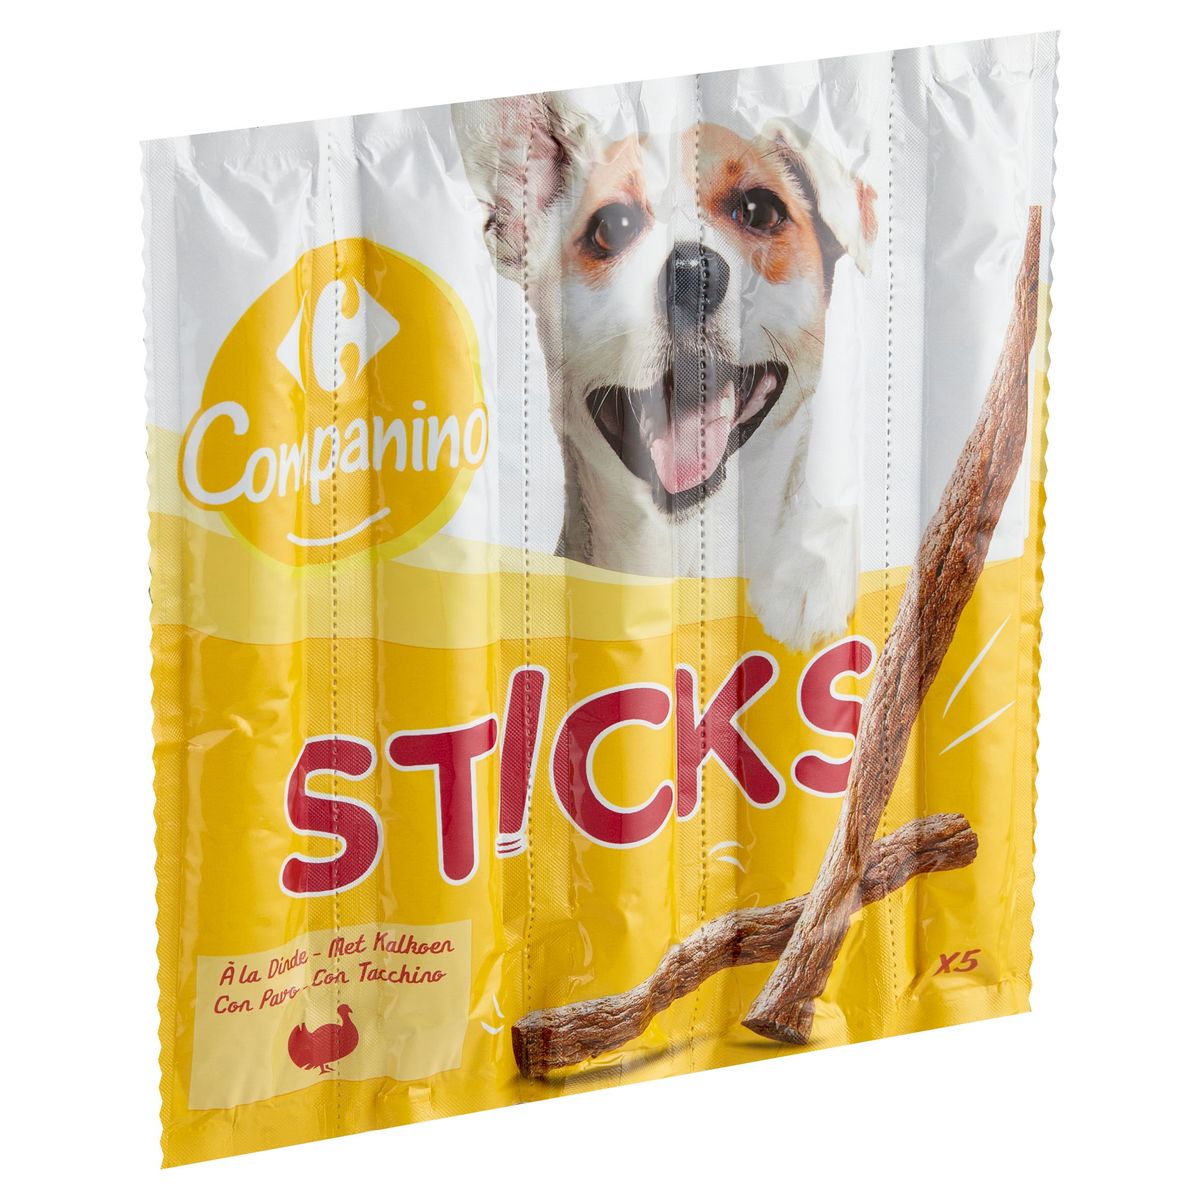 Carrefour Companino Sticks met Kalkoen 5 x 10 g